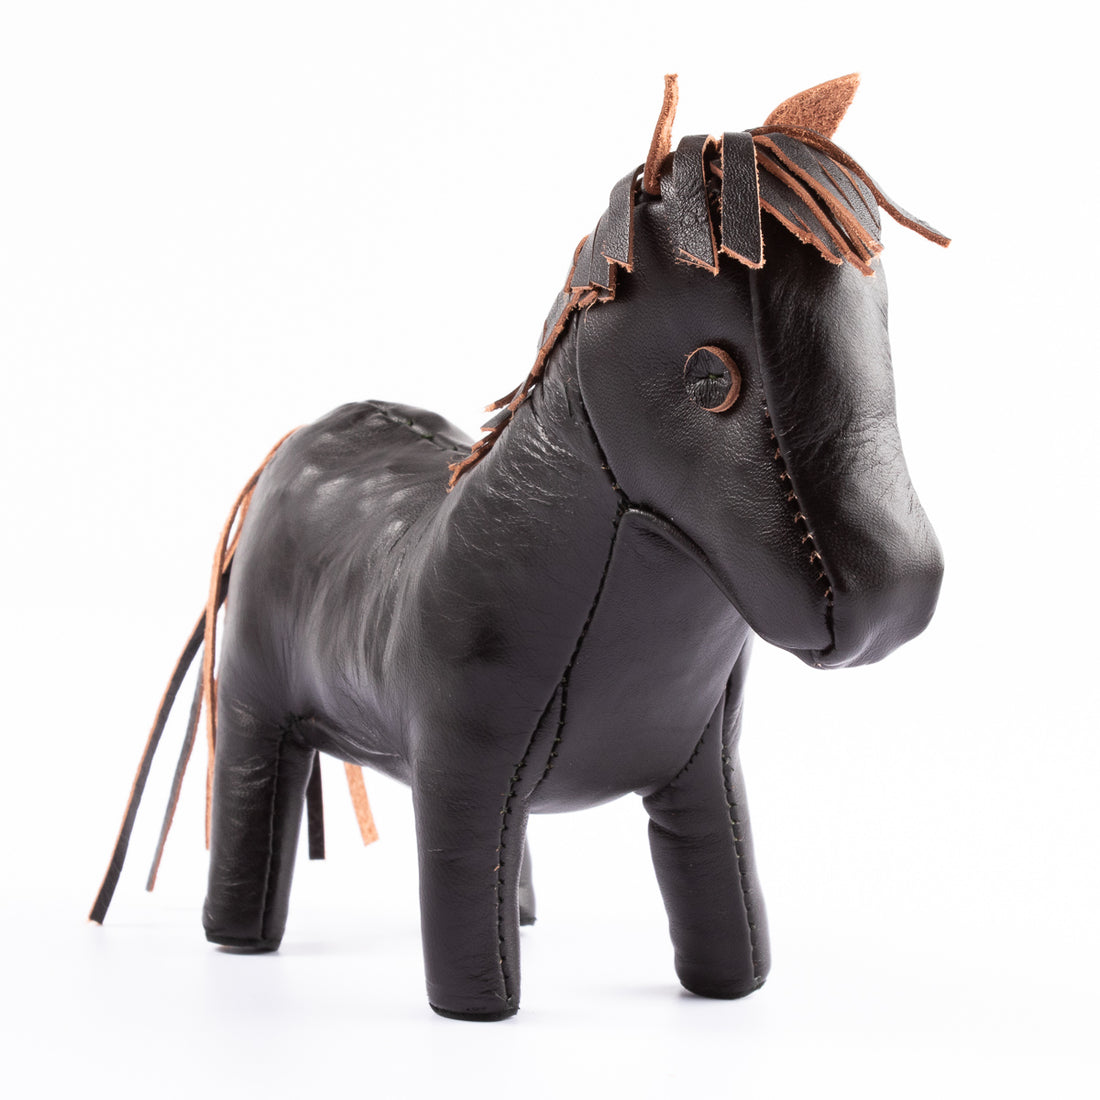 The Real McCoy's Handcrafted Horsehide Donkey - Black - Standard & Strange